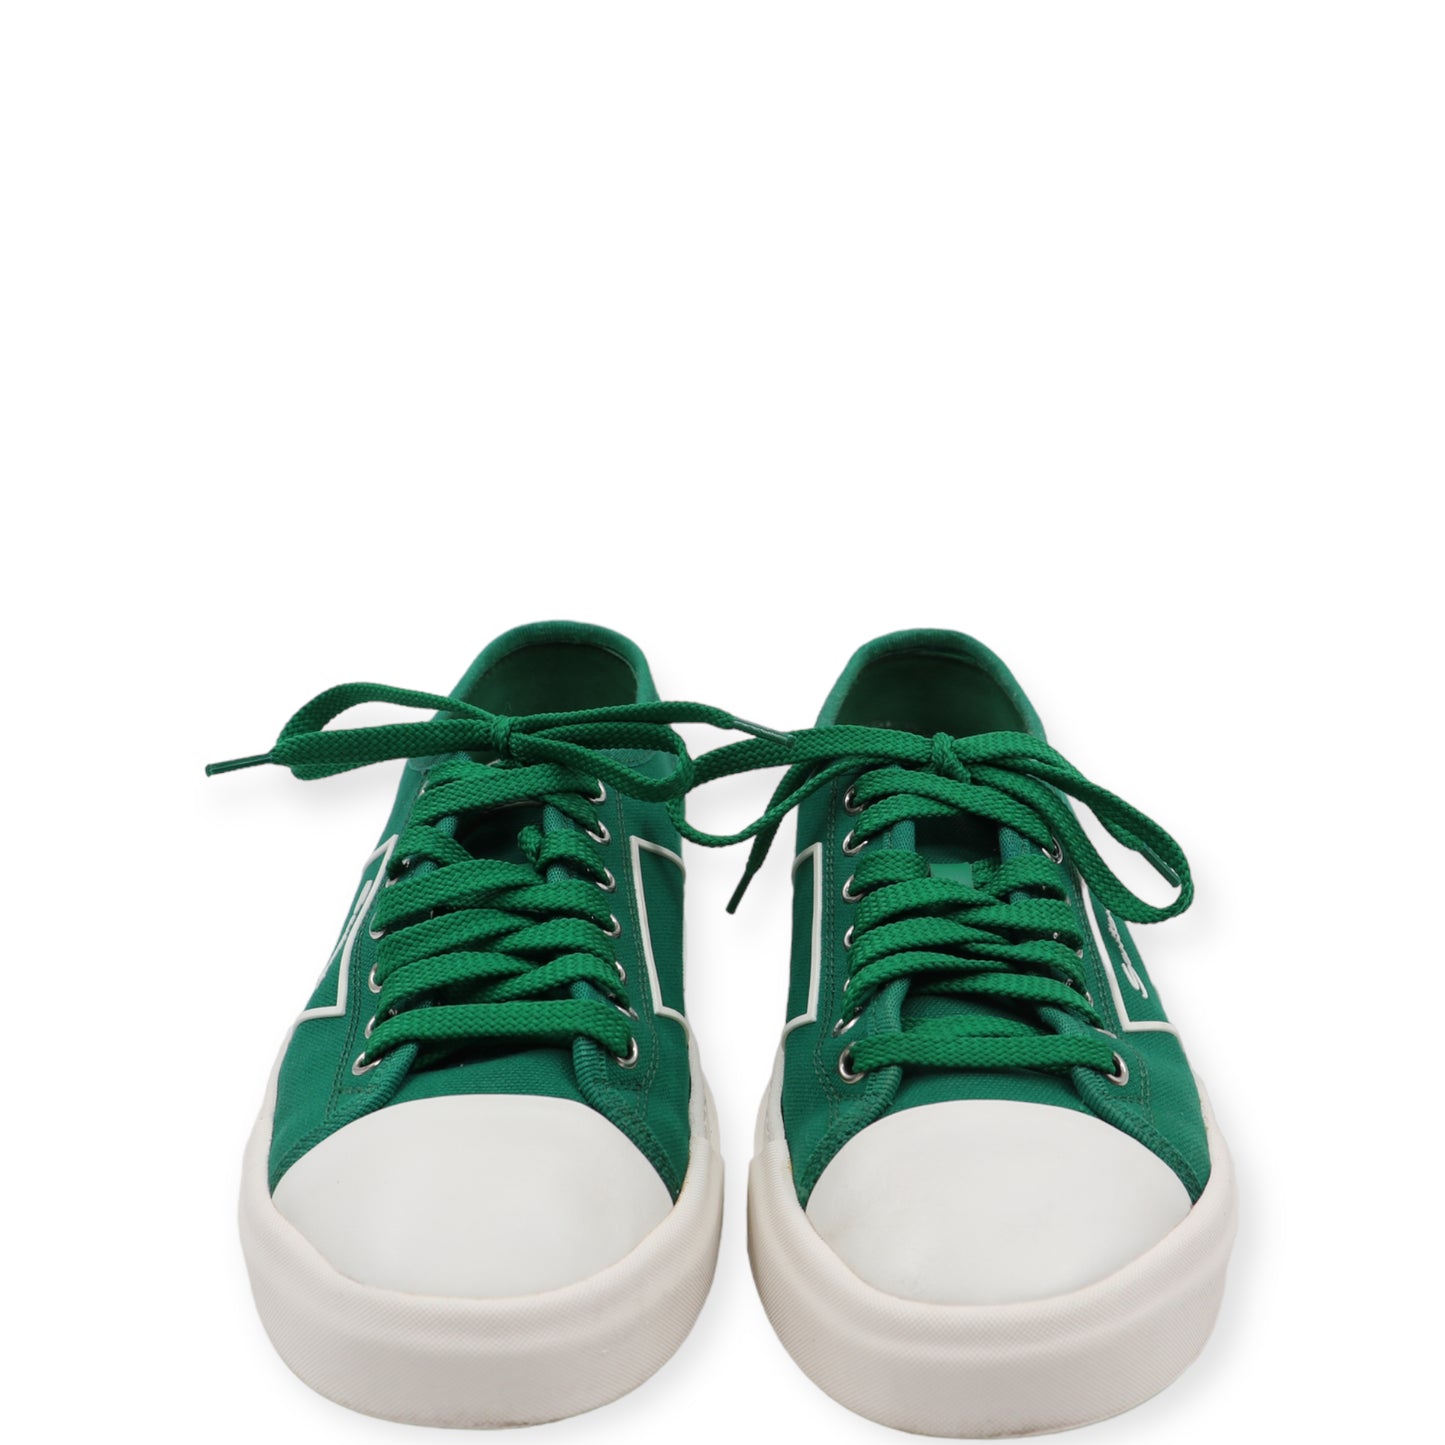 Santoni x DBS Sneaker grün